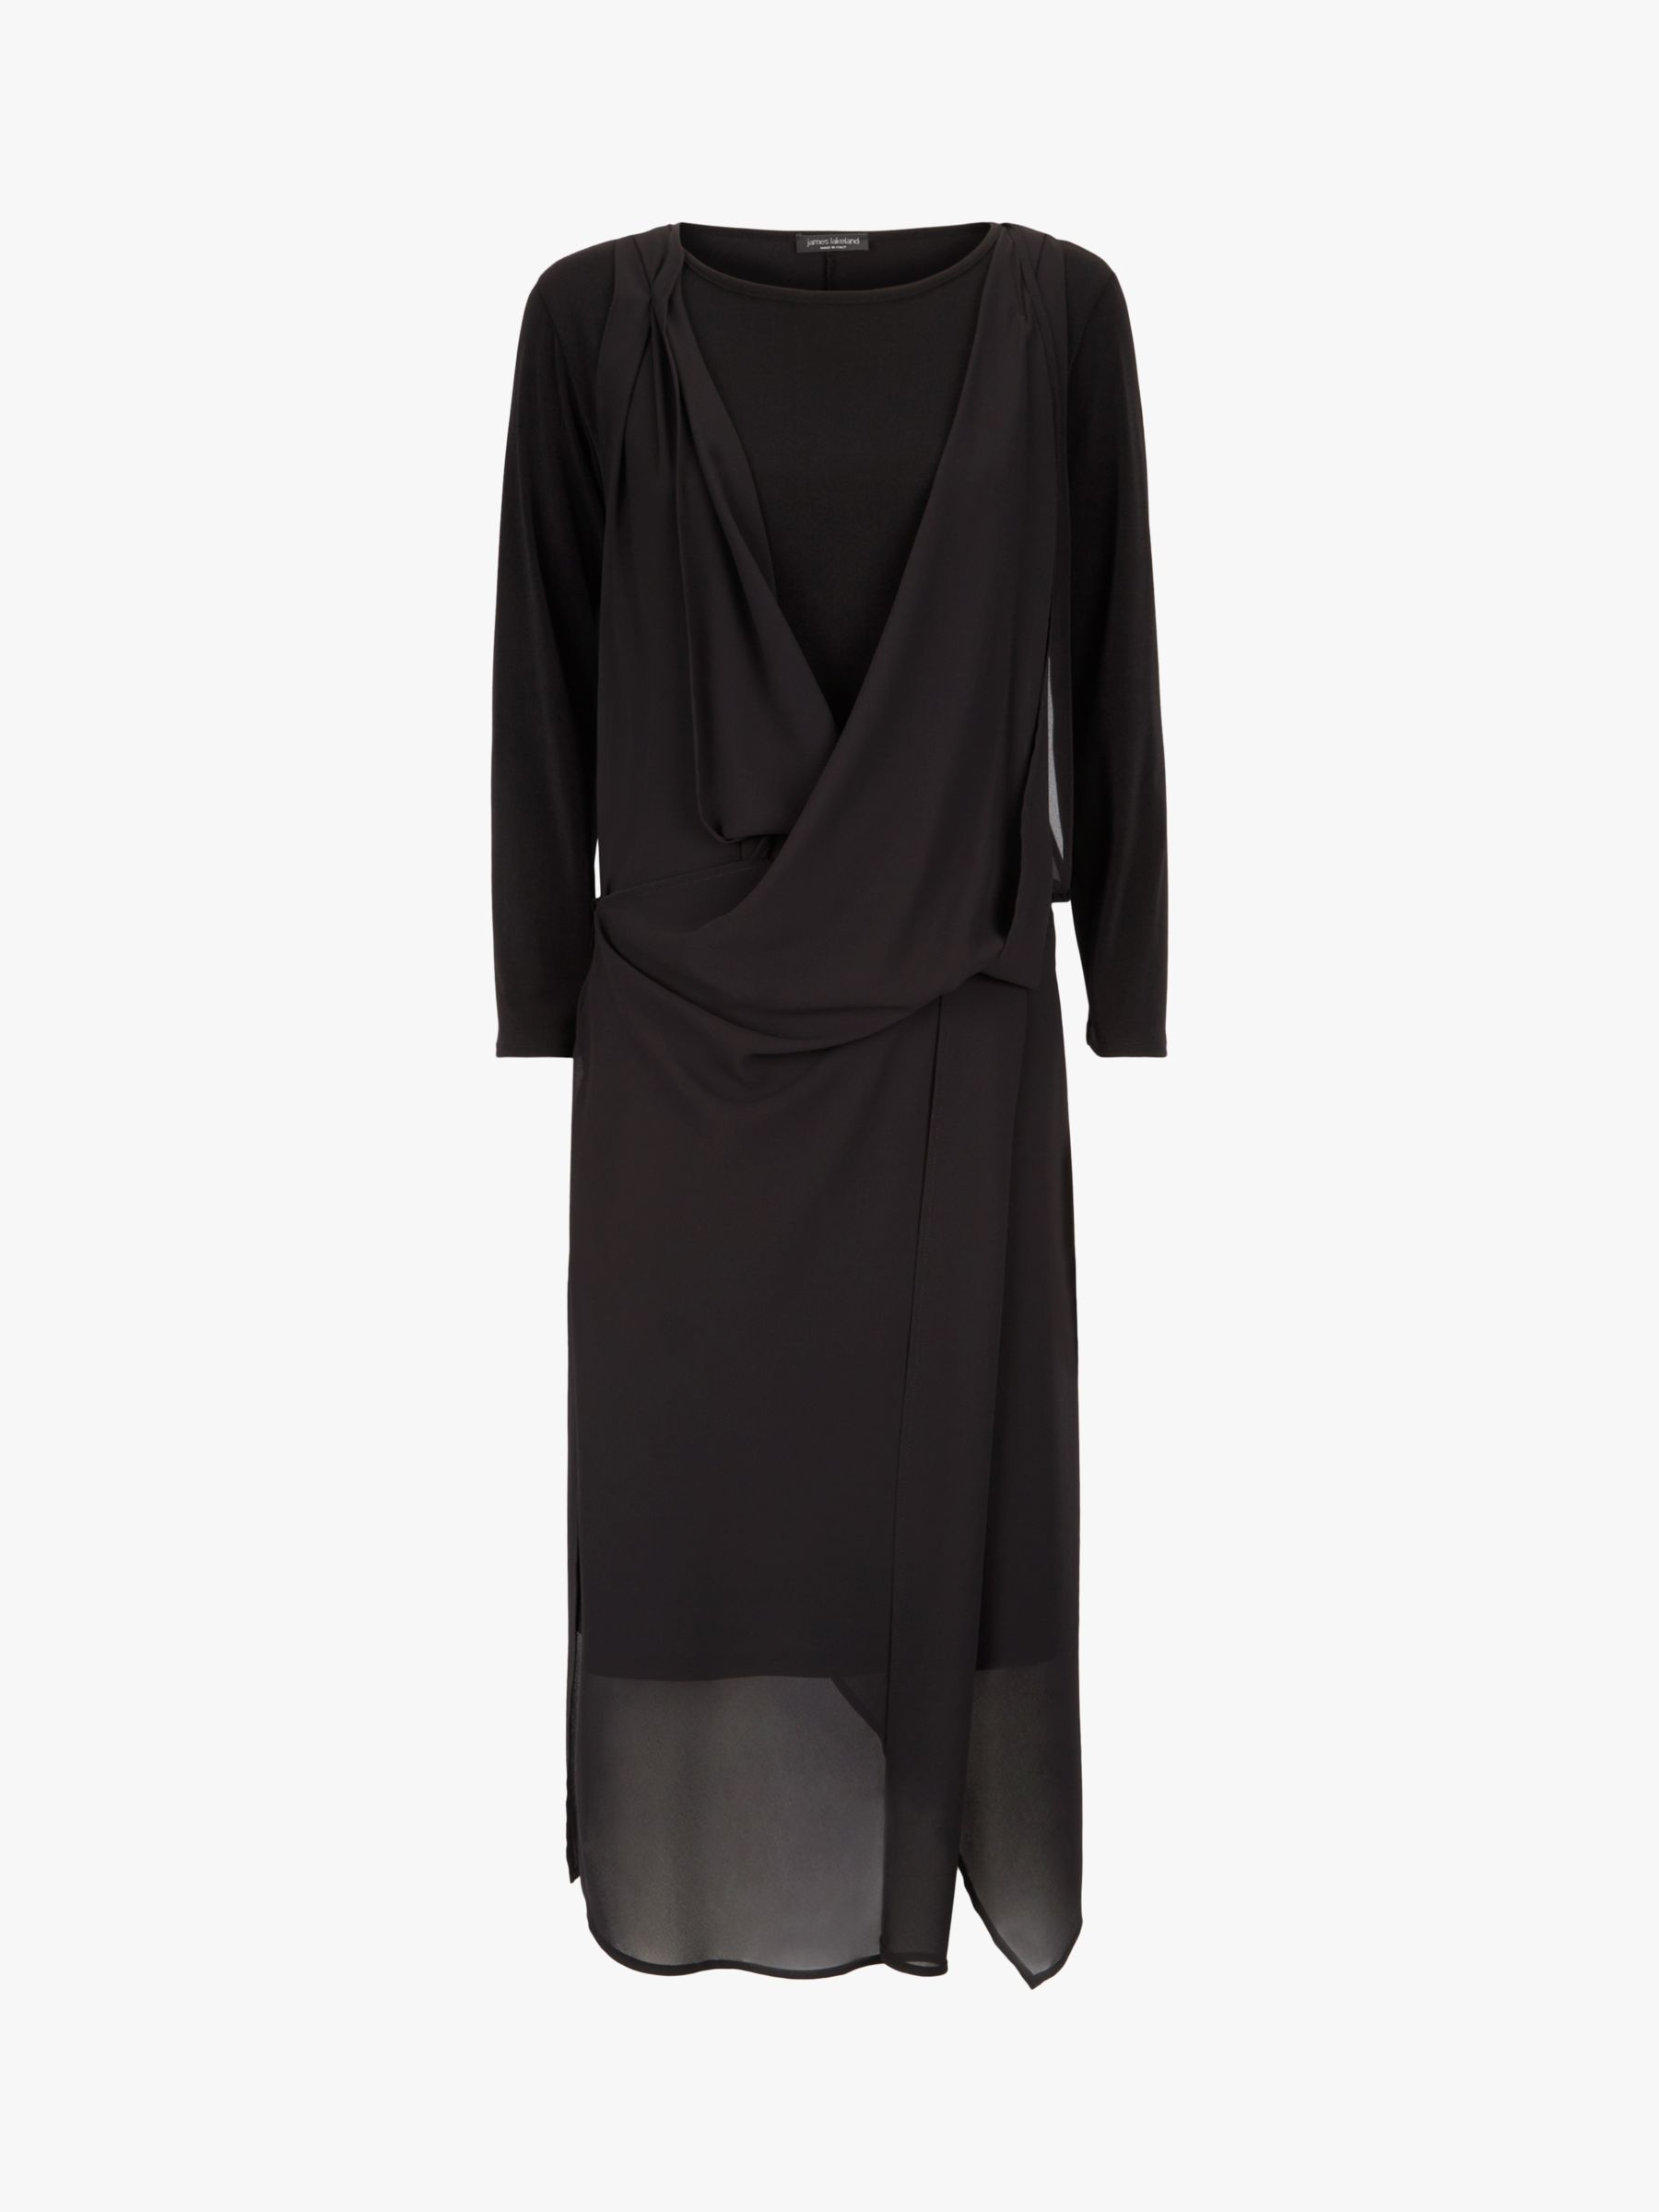 James Lakeland Layered V-Neck Chiffon Dress, Black at John Lewis & Partners